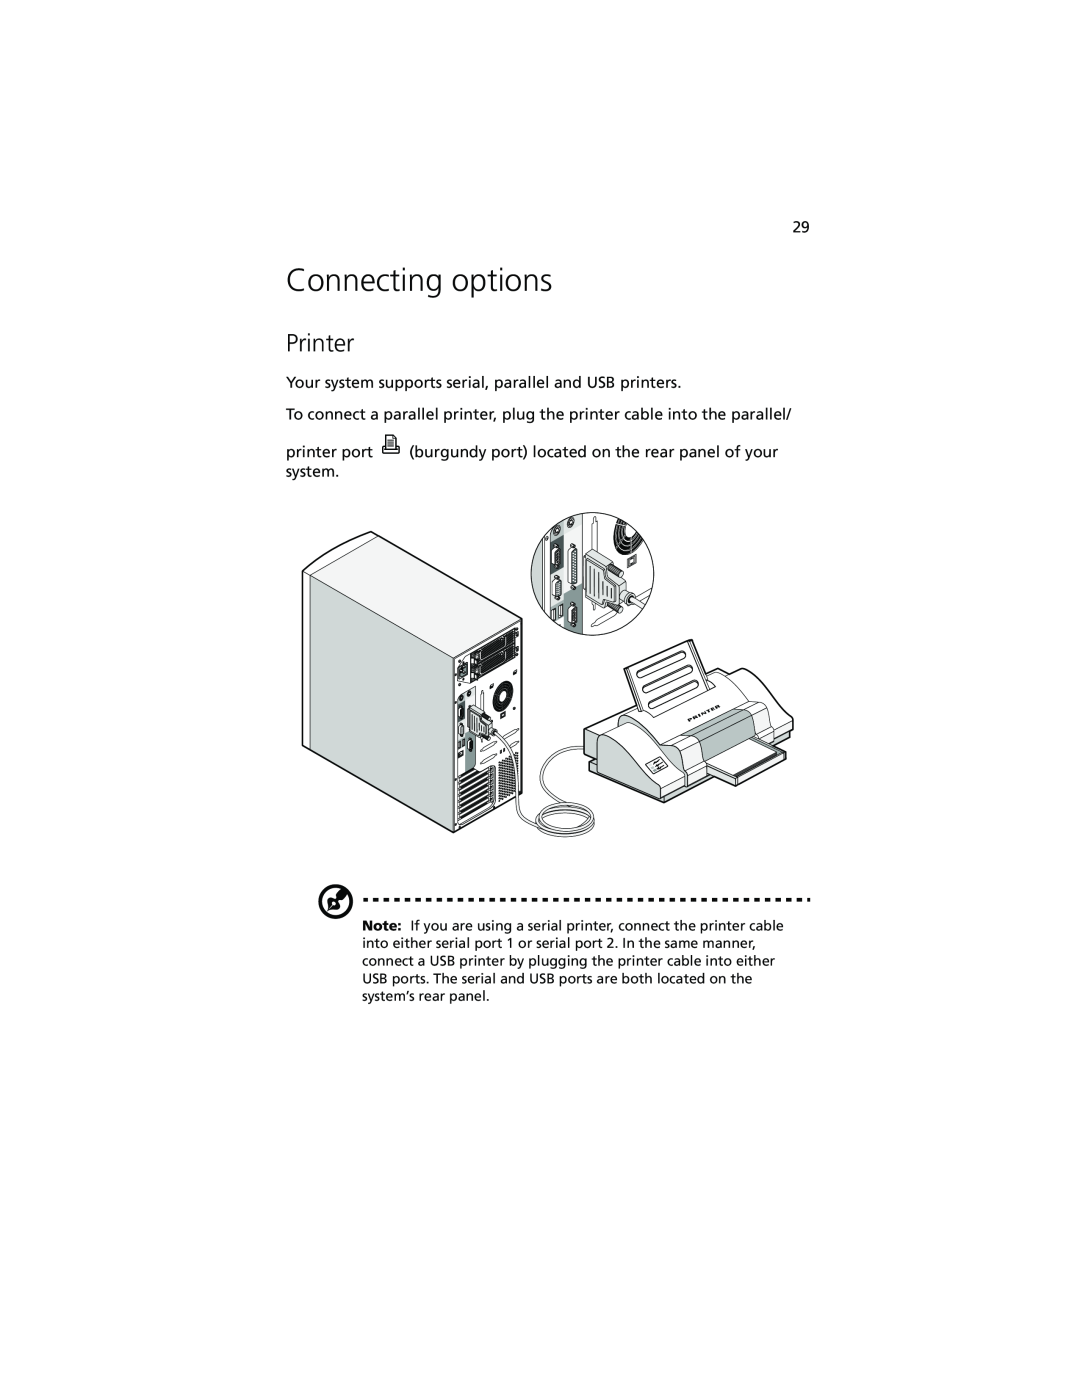 Acer Altos G610 manual Connecting options, Printer 